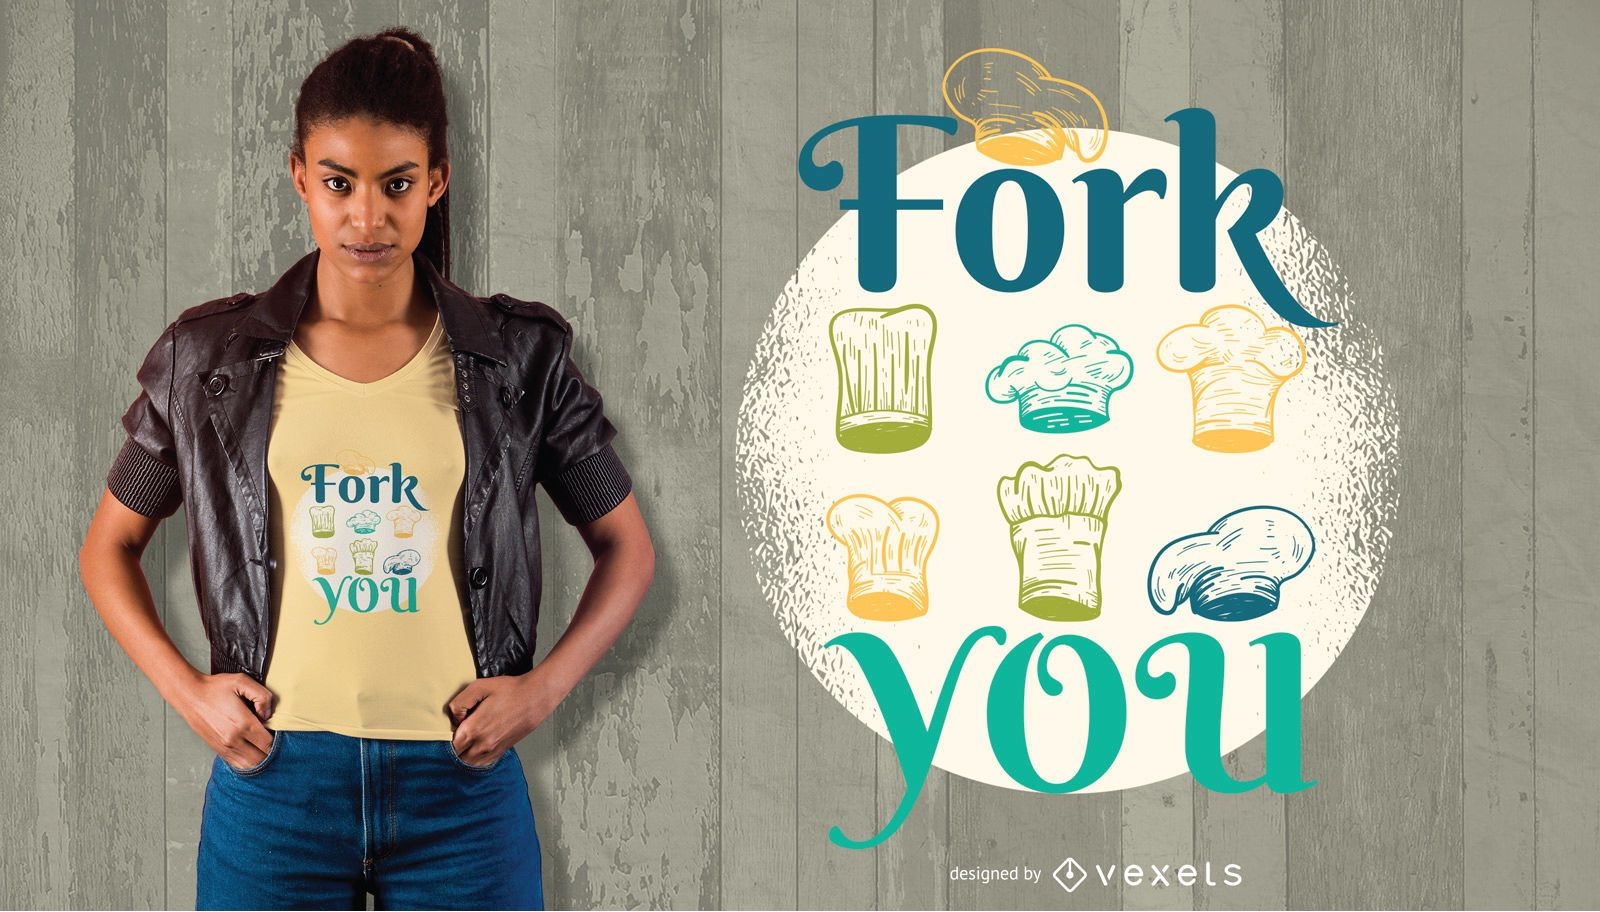 Fork voc? design de t-shirt